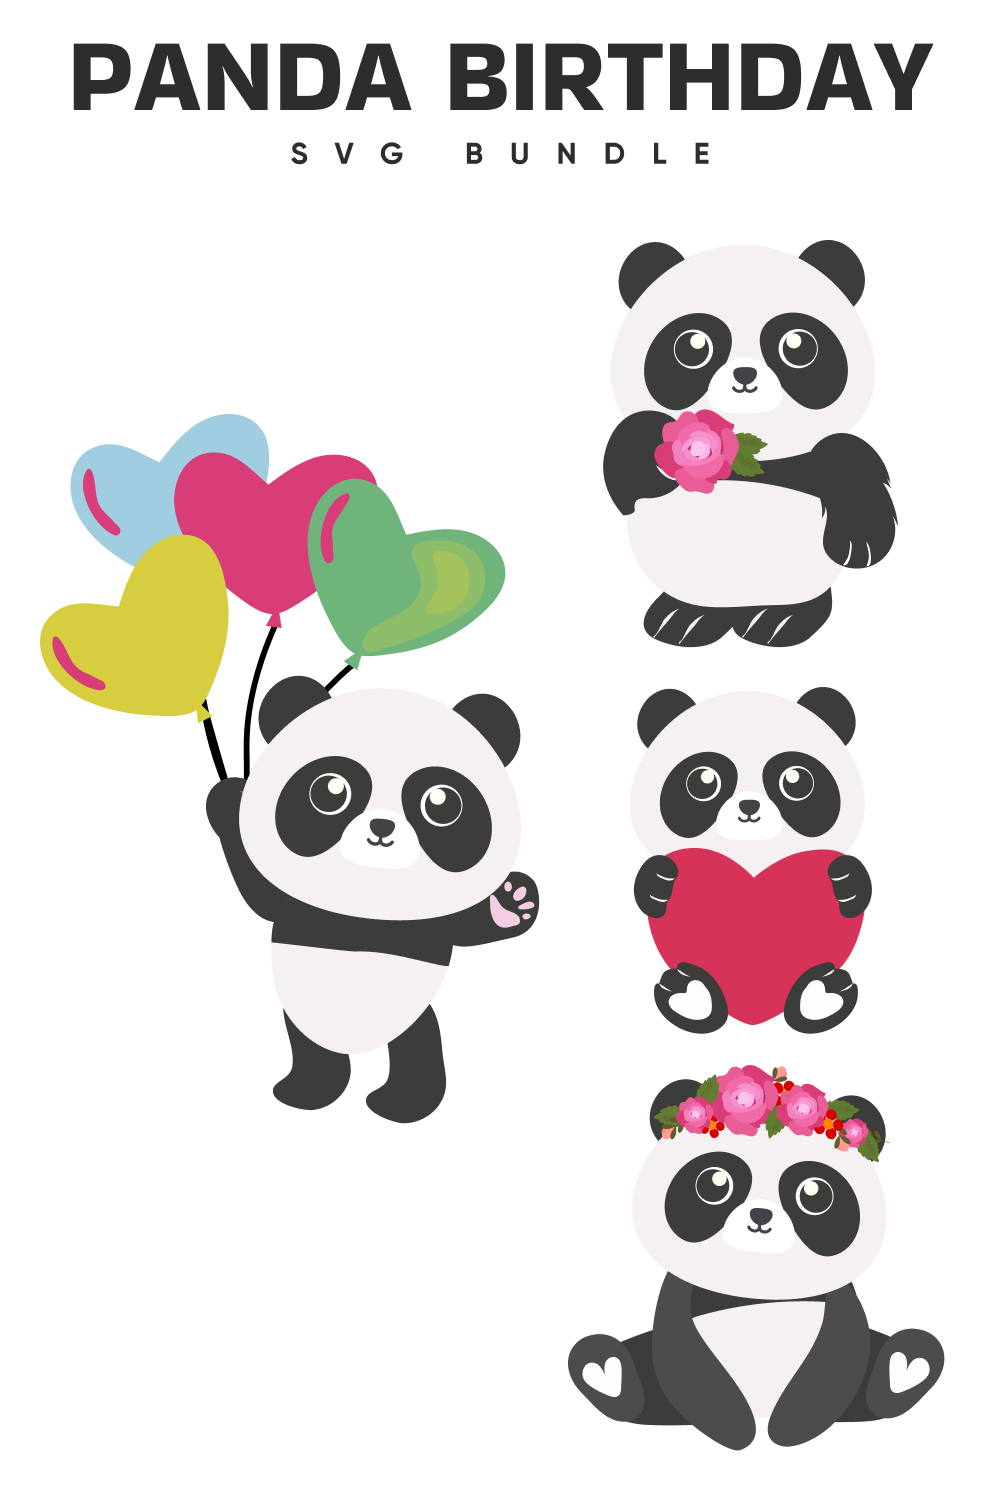 Panda birthday svg bundle.